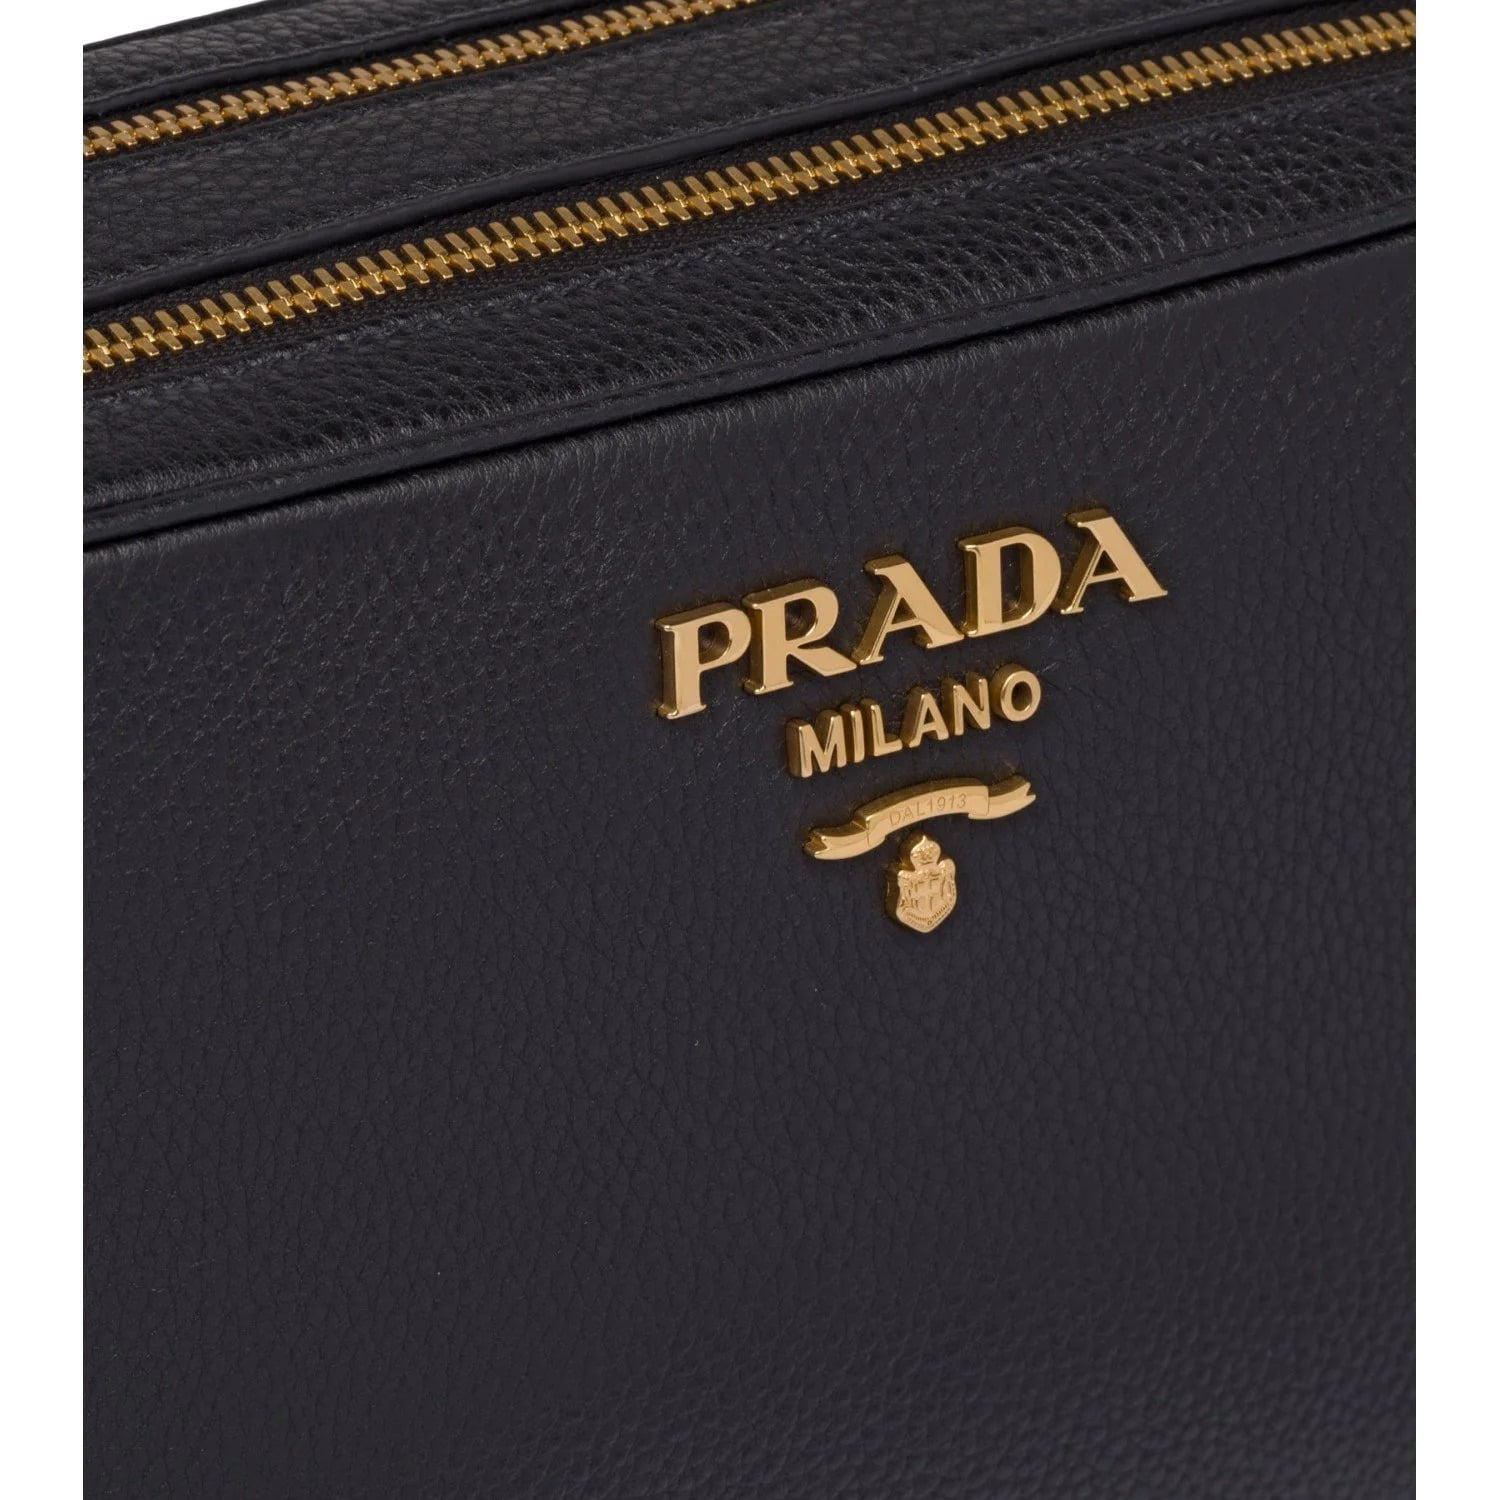 Prada Women's Vitello Phenix 1bh079 Pink Leather Cross Body Bag: Handbags